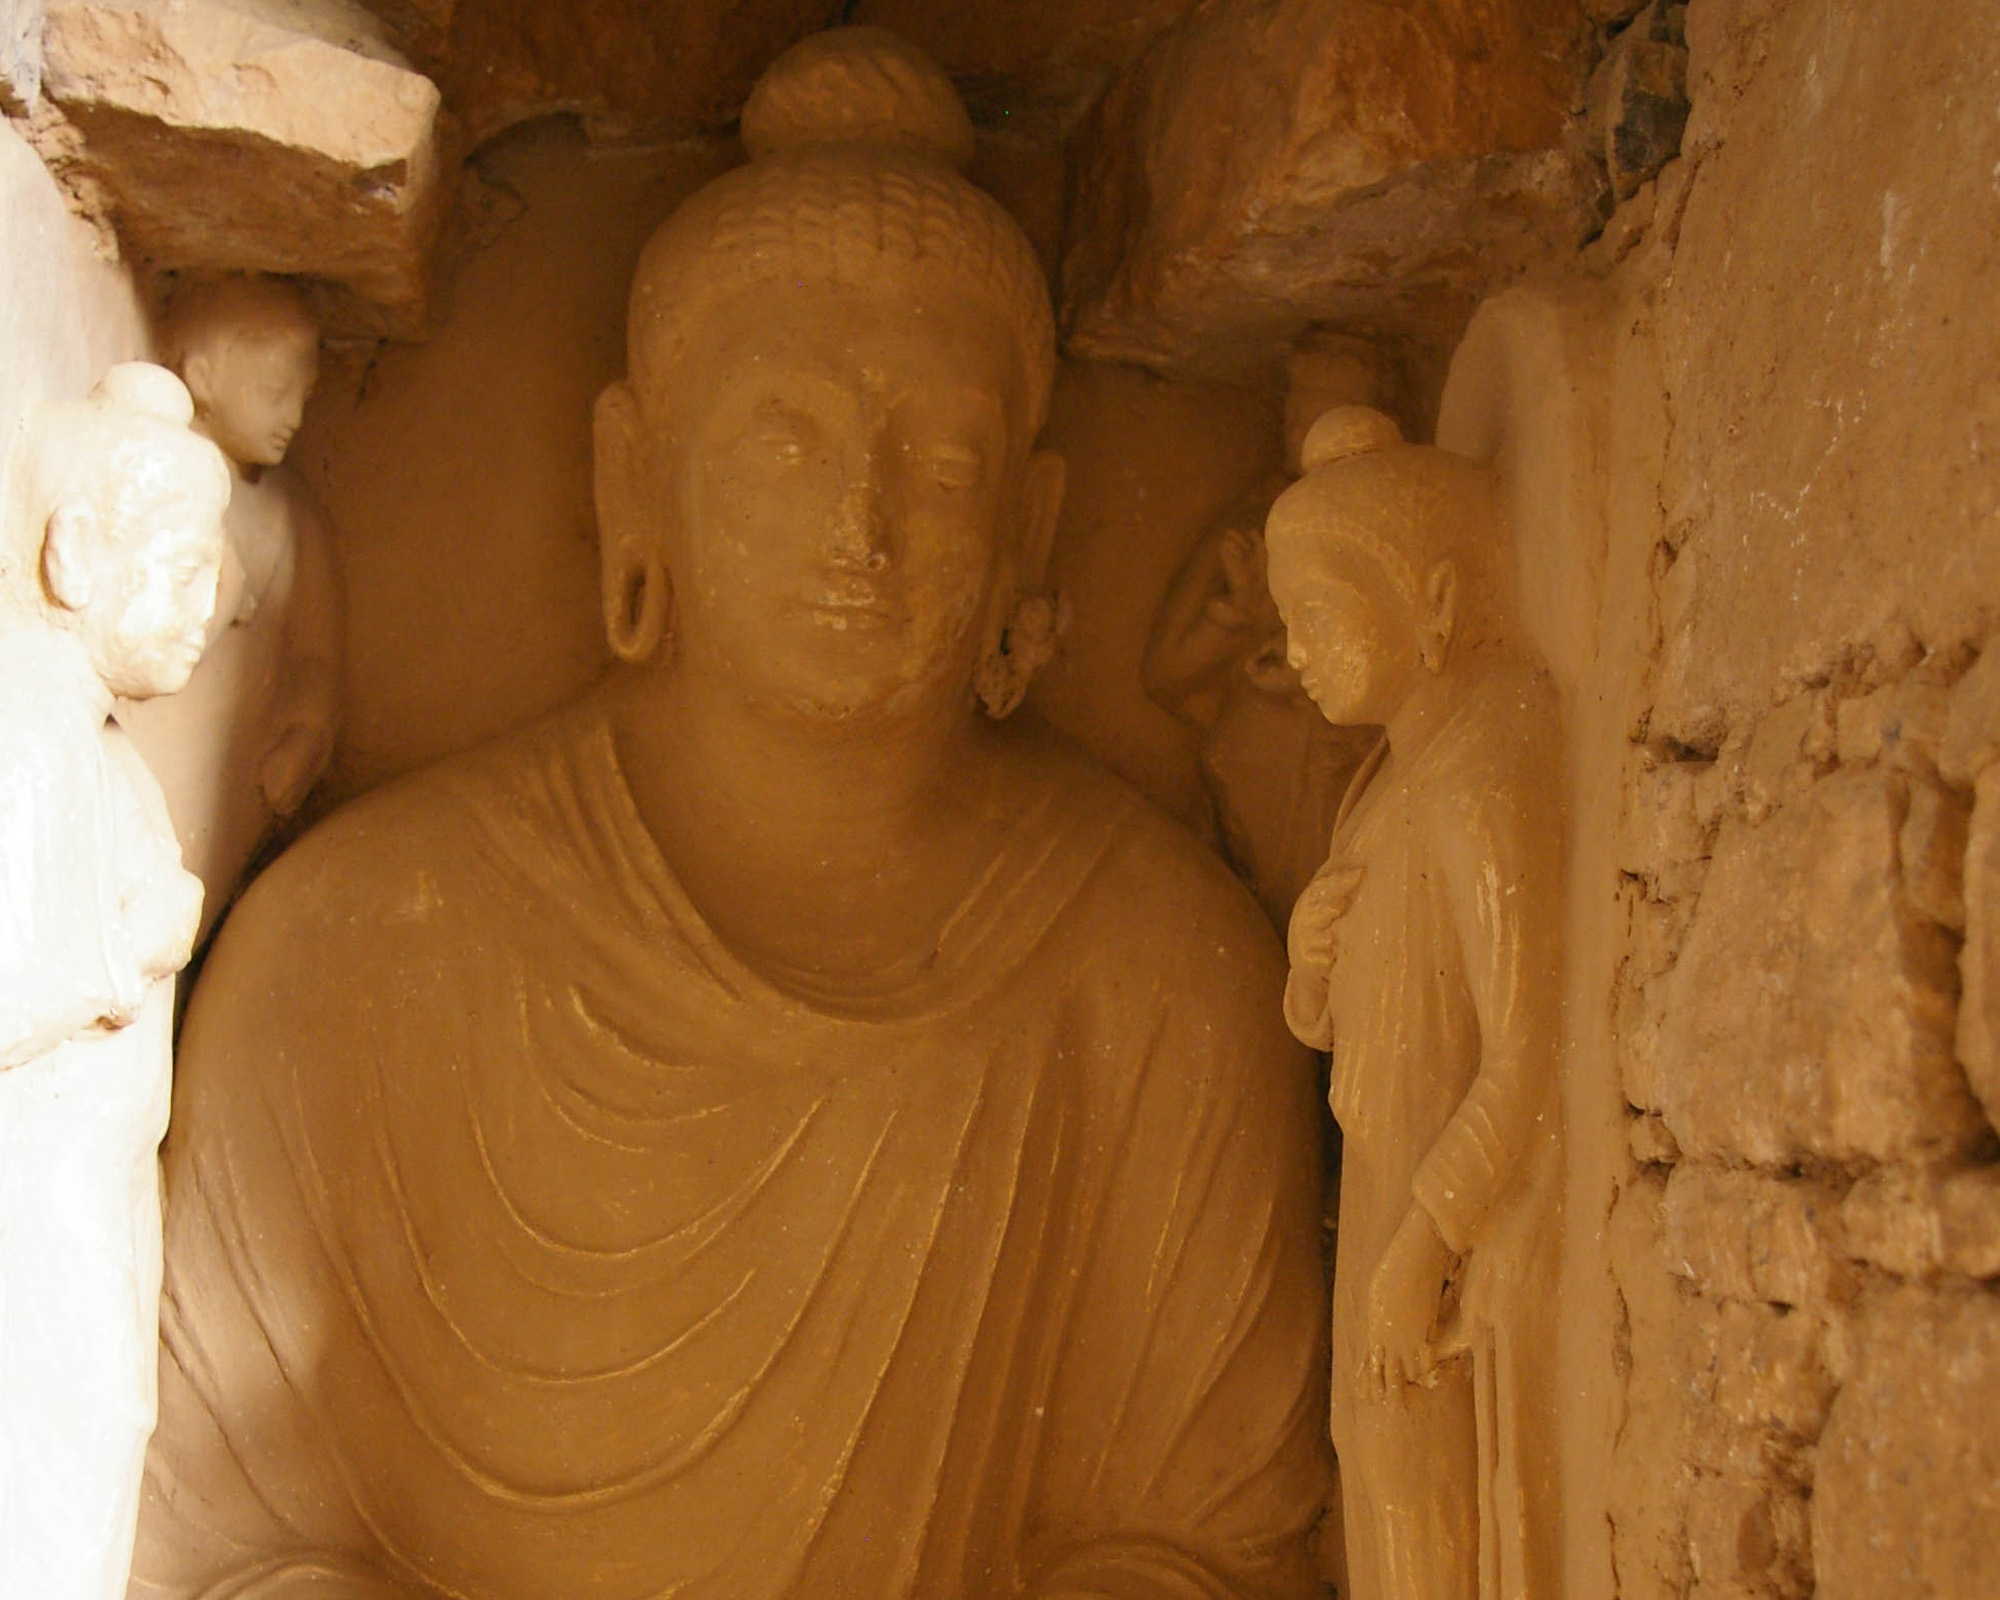 buddhist1